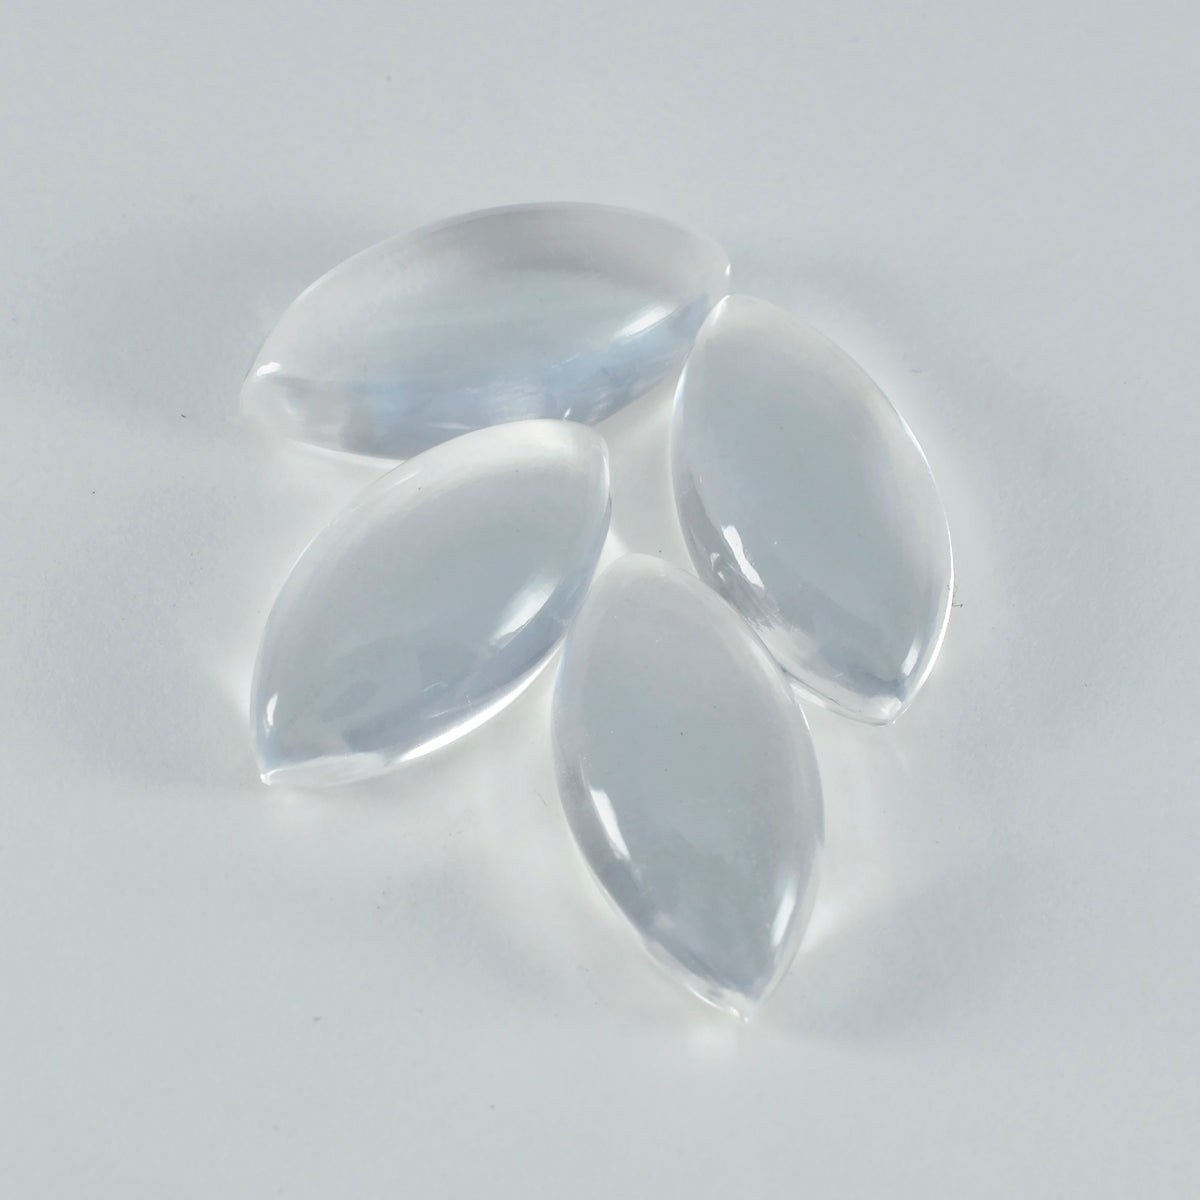 Riyogems 1PC White Crystal Quartz Cabochon 9x18 mm Marquise Shape good-looking Quality Gemstone